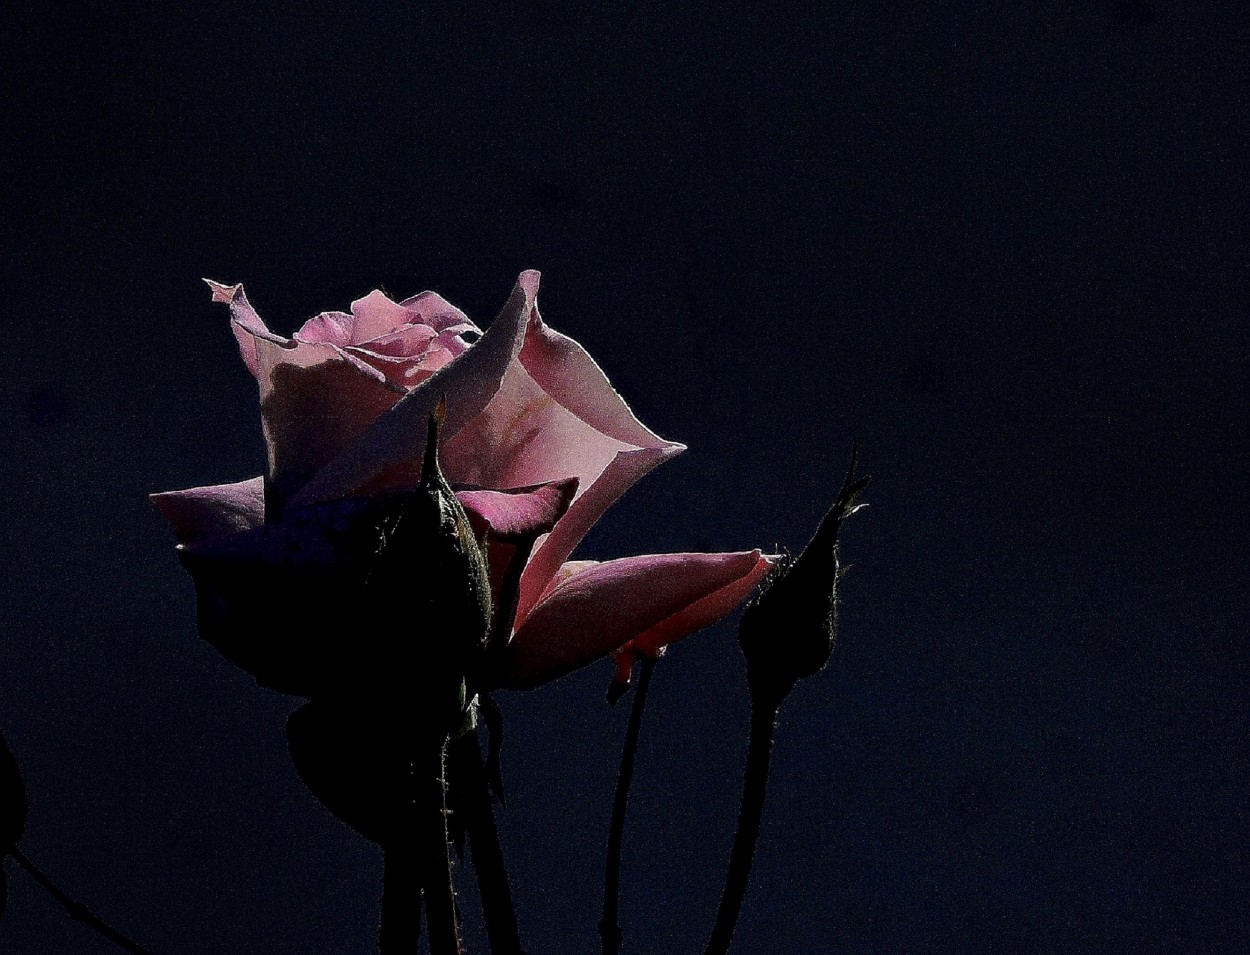 "Rosa rosa" de Silvia Olliari